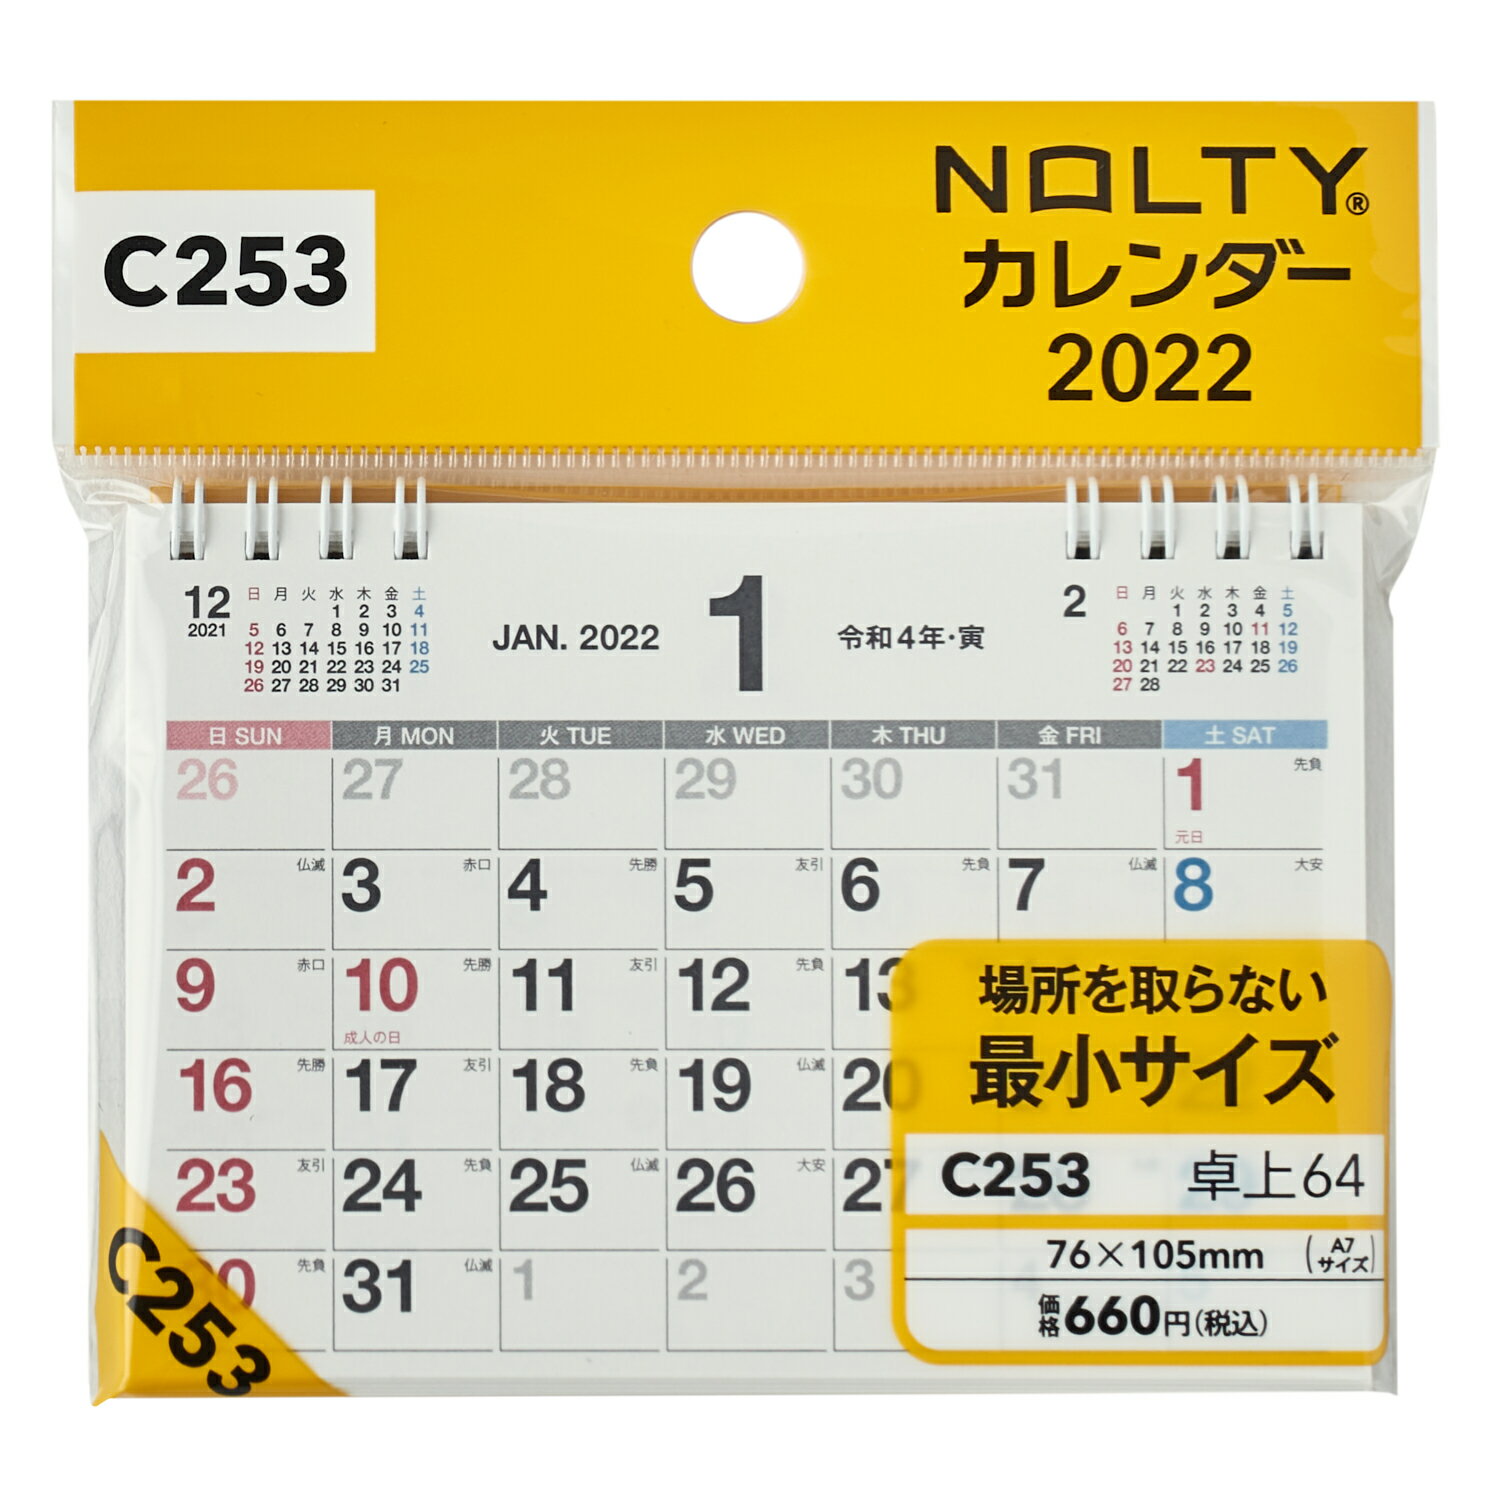 C242 NOLTYカレンダー 2022 卓上 【94%OFF!】 2022